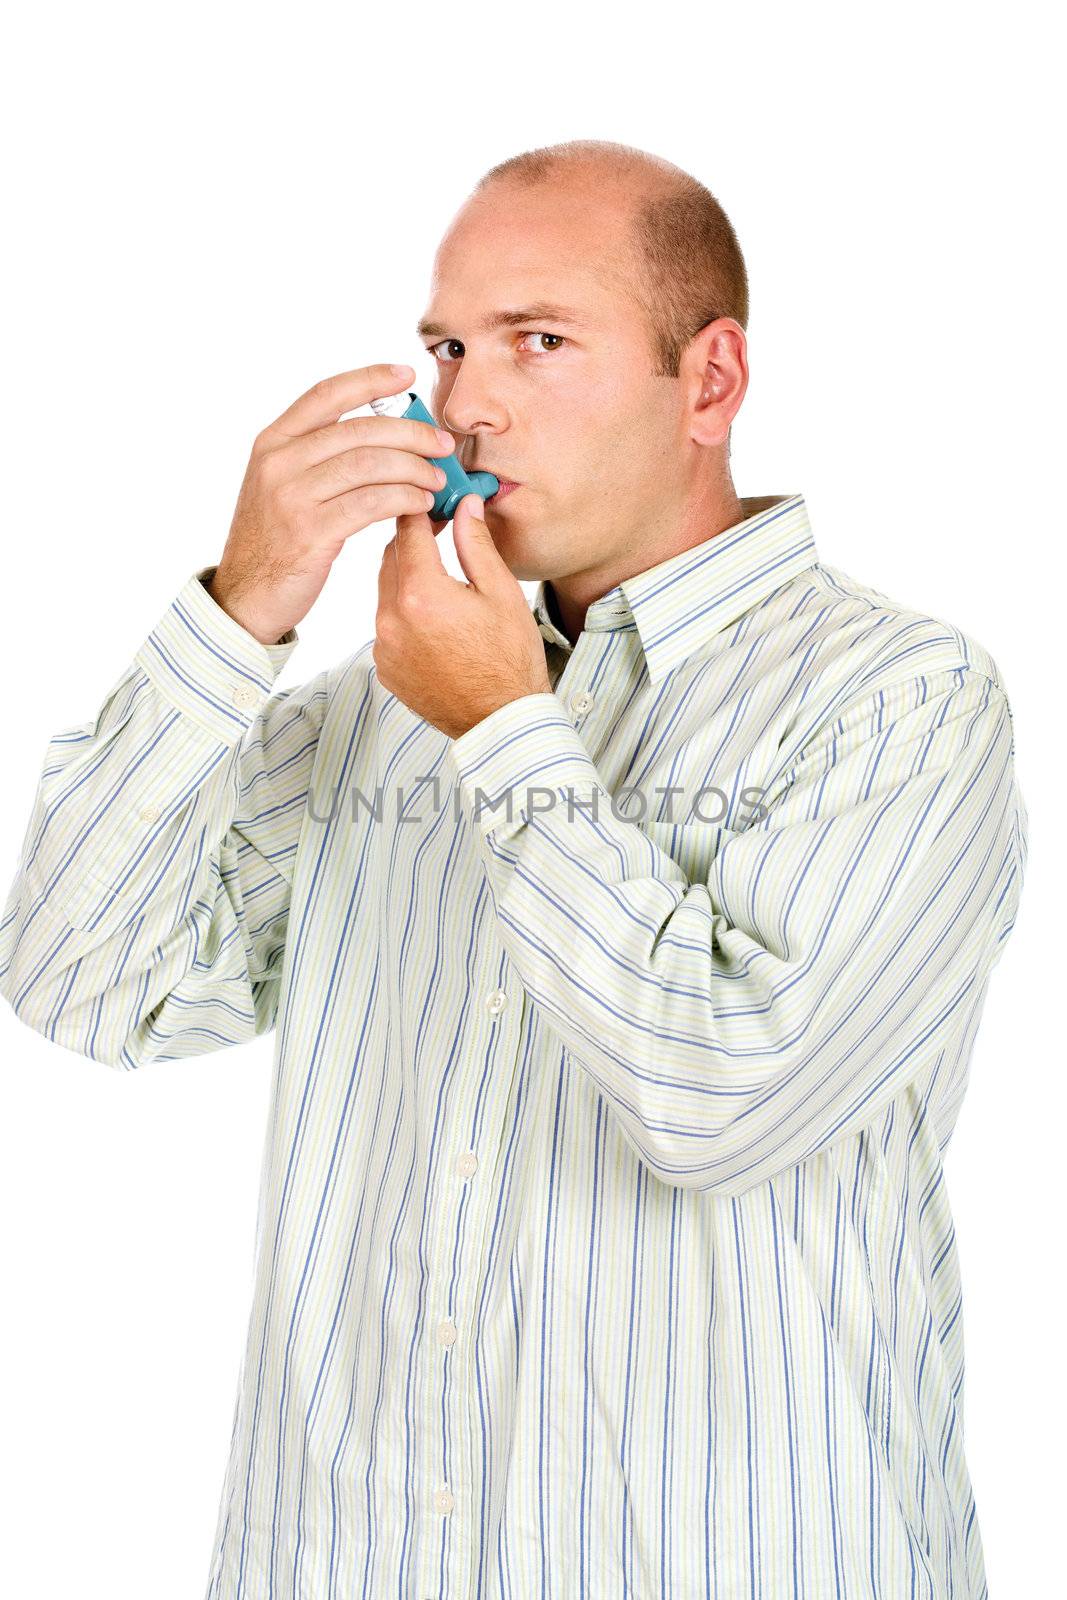 Man holding asthma medicine inhaler with both hands by imarin